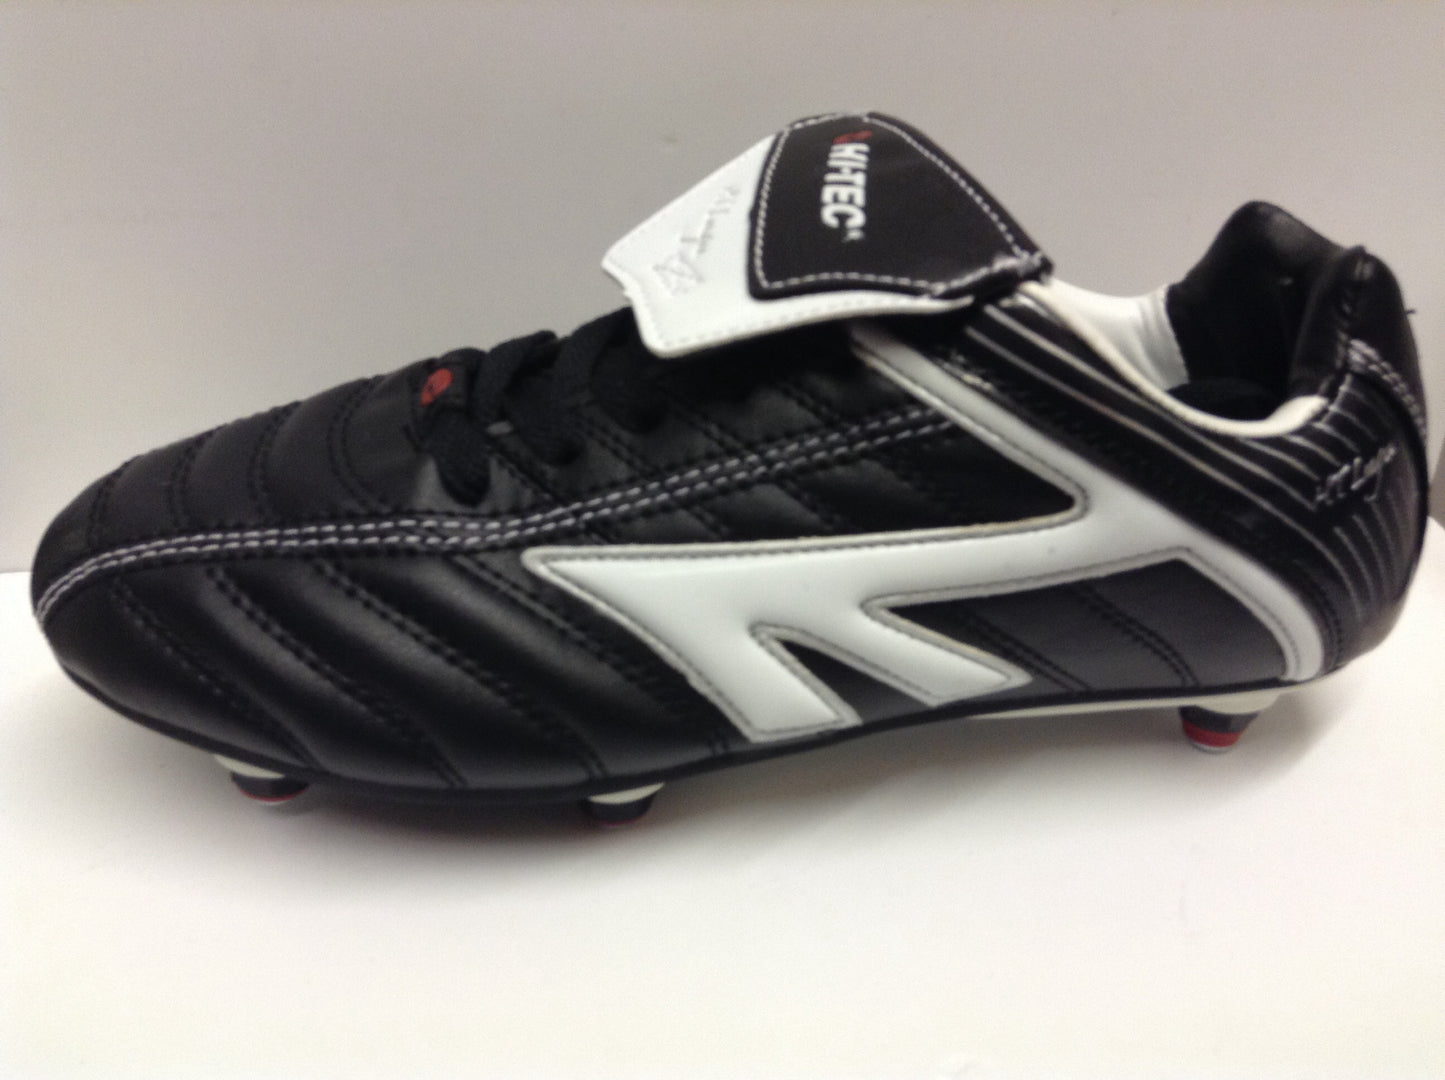 Hi-Tec League SI Jnr football boots - Size 4 - Black and White